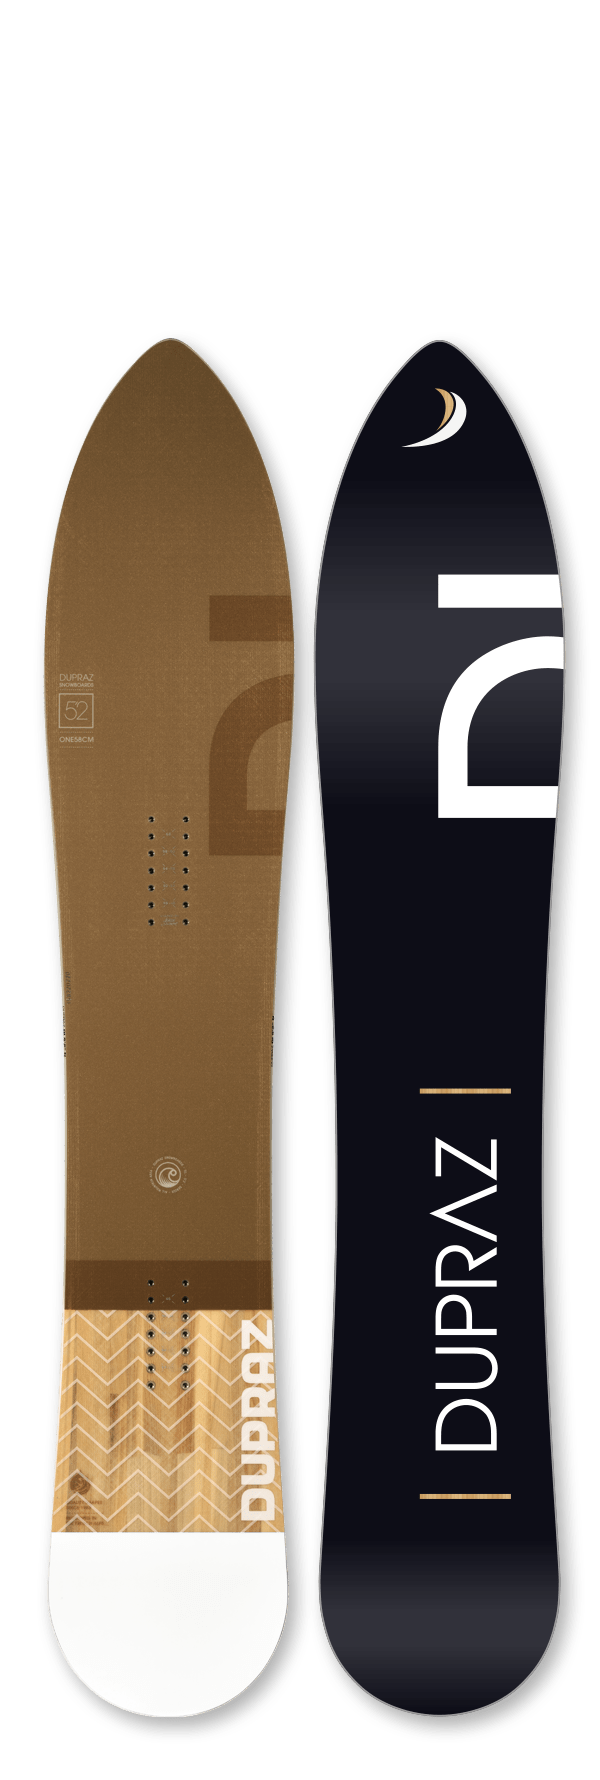 Image of a D1 Dupraz Snow board